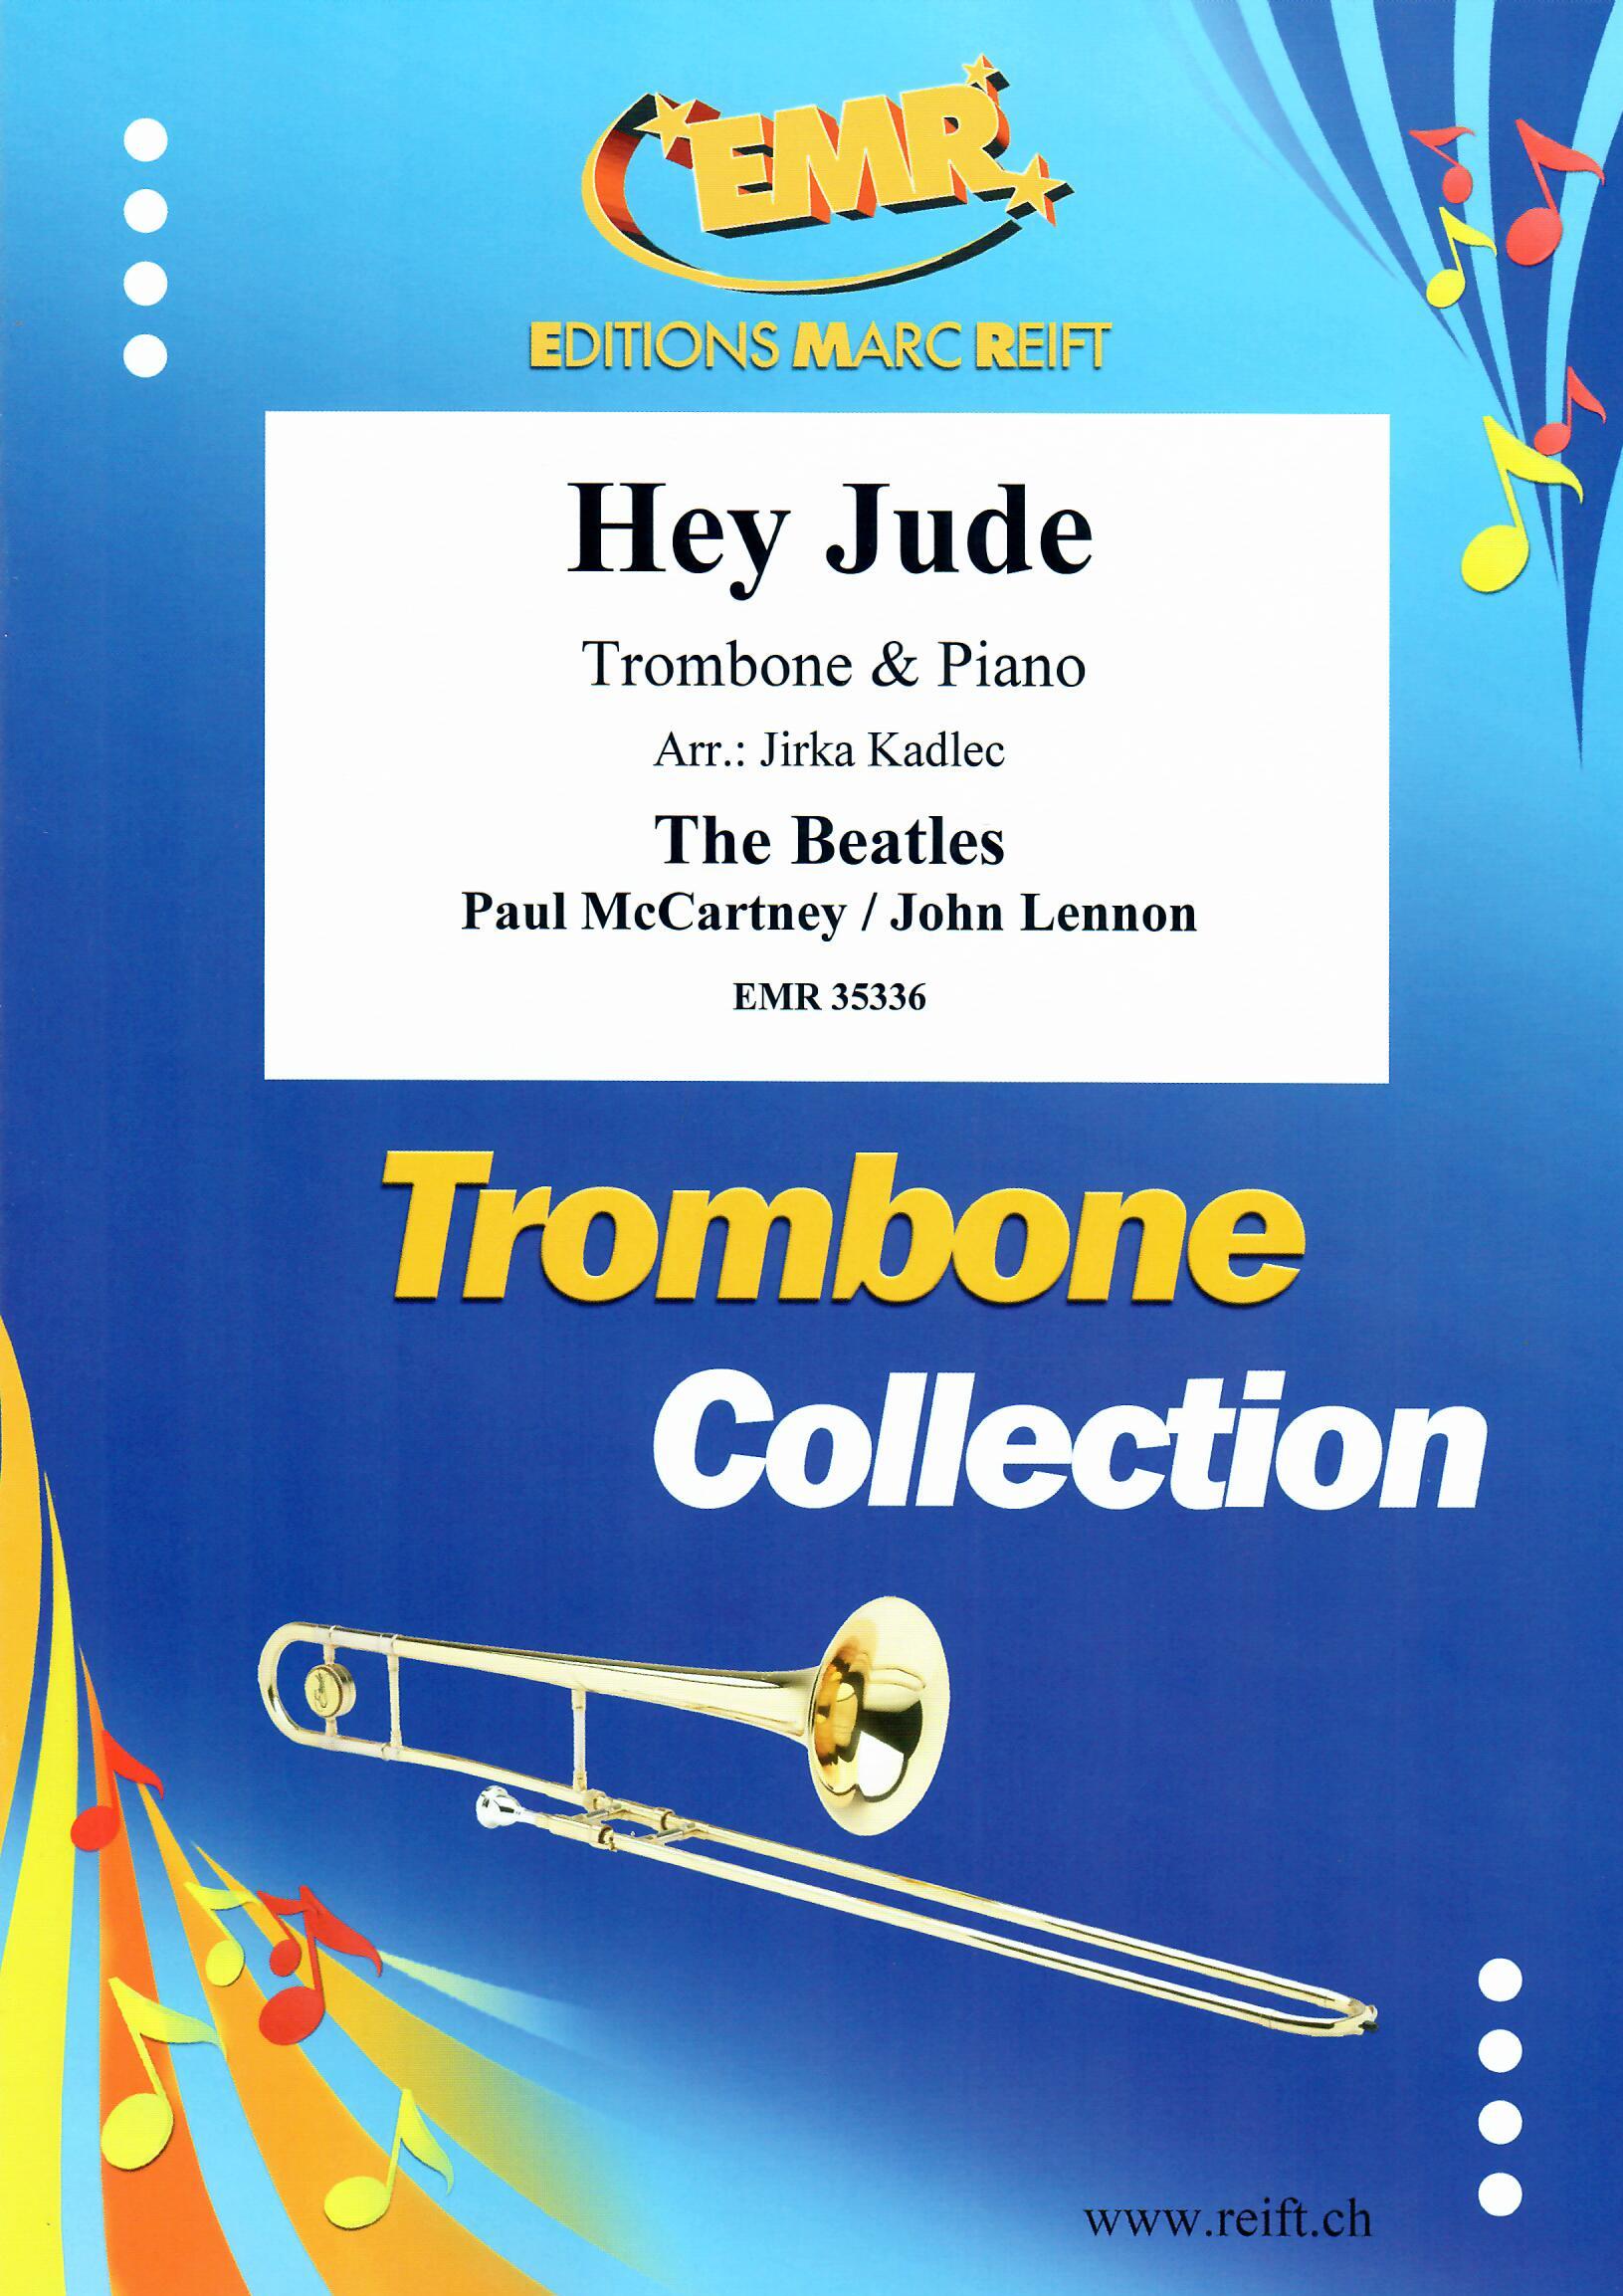 HEY JUDE, SOLOS - Trombone